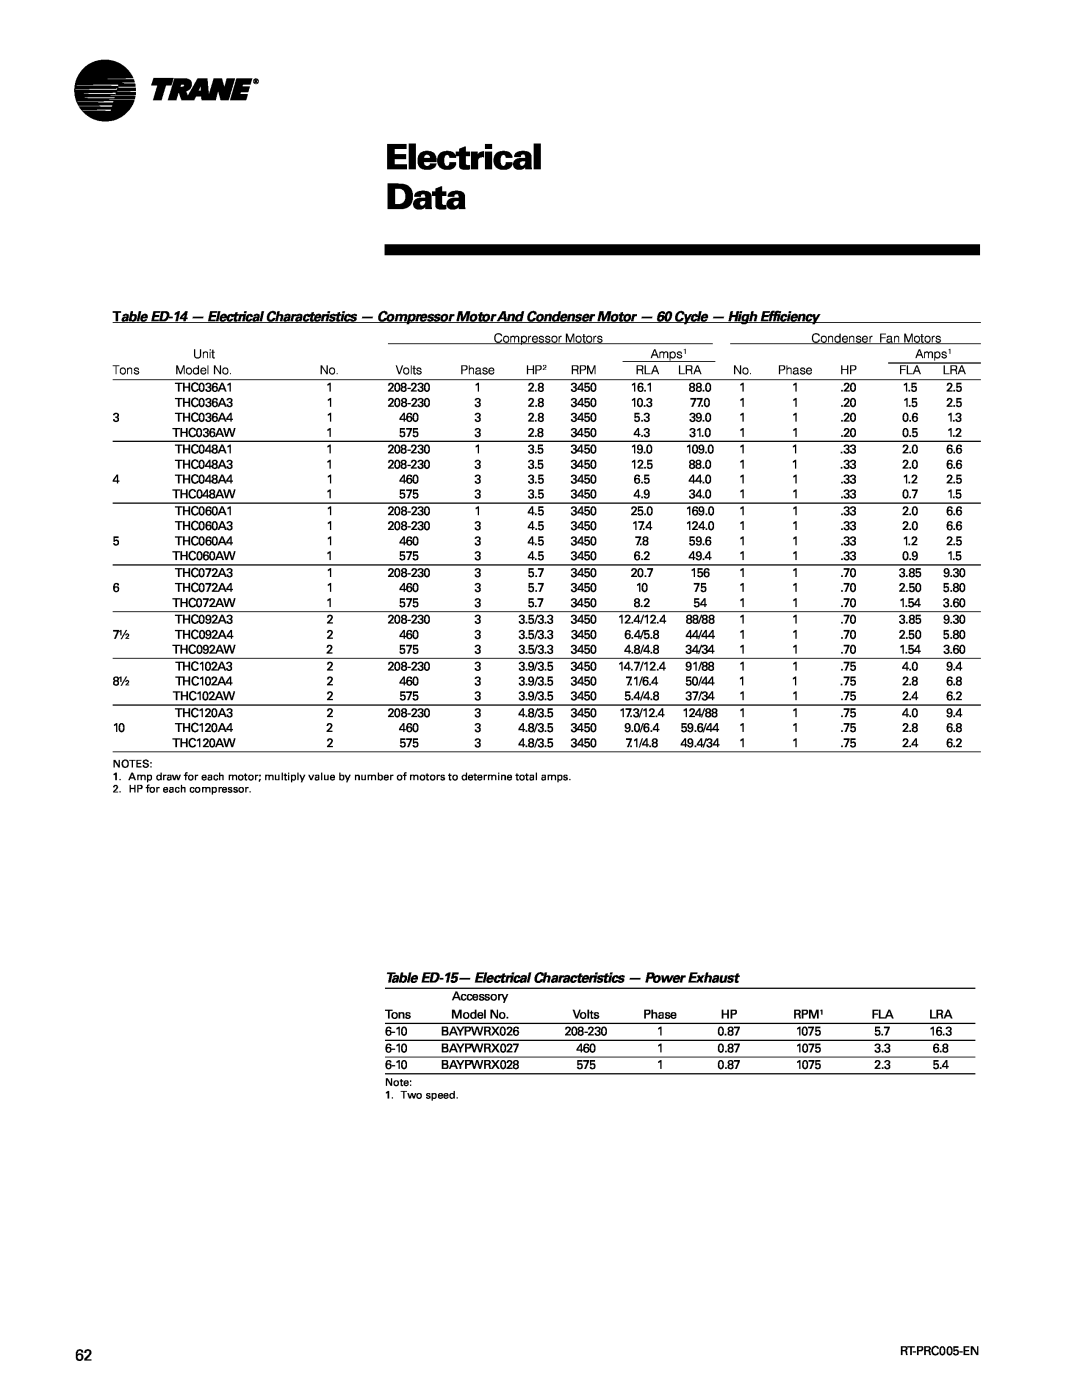 Trane RT-PRC005 manual Electrical Data, 3450 